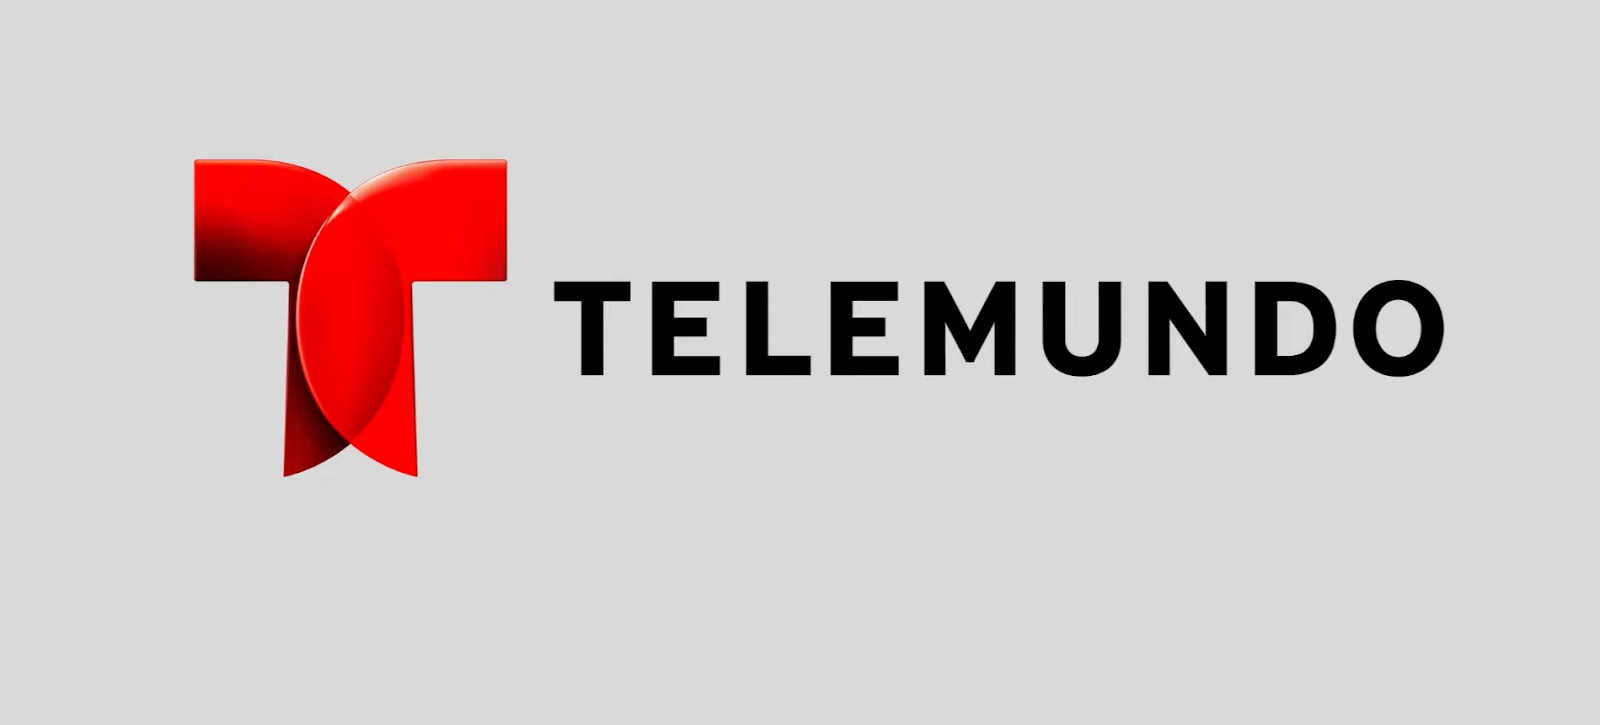 Discovering Telemundo’s Channel on DIRECTV